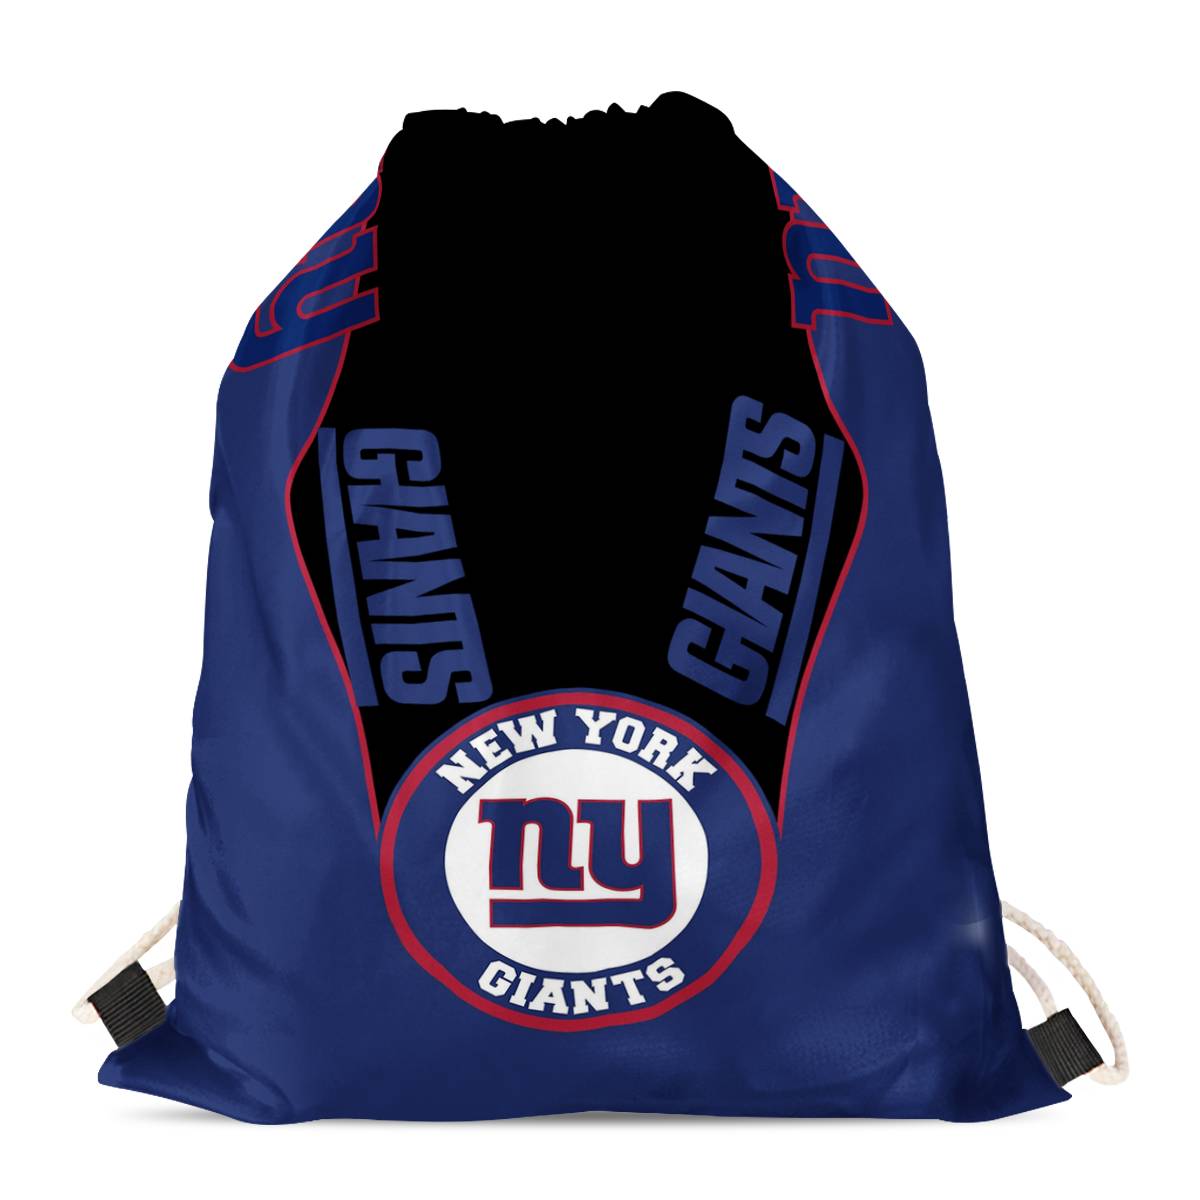 New York Giants Drawstring Backpack sack / Gym bag 18" x 14" 001